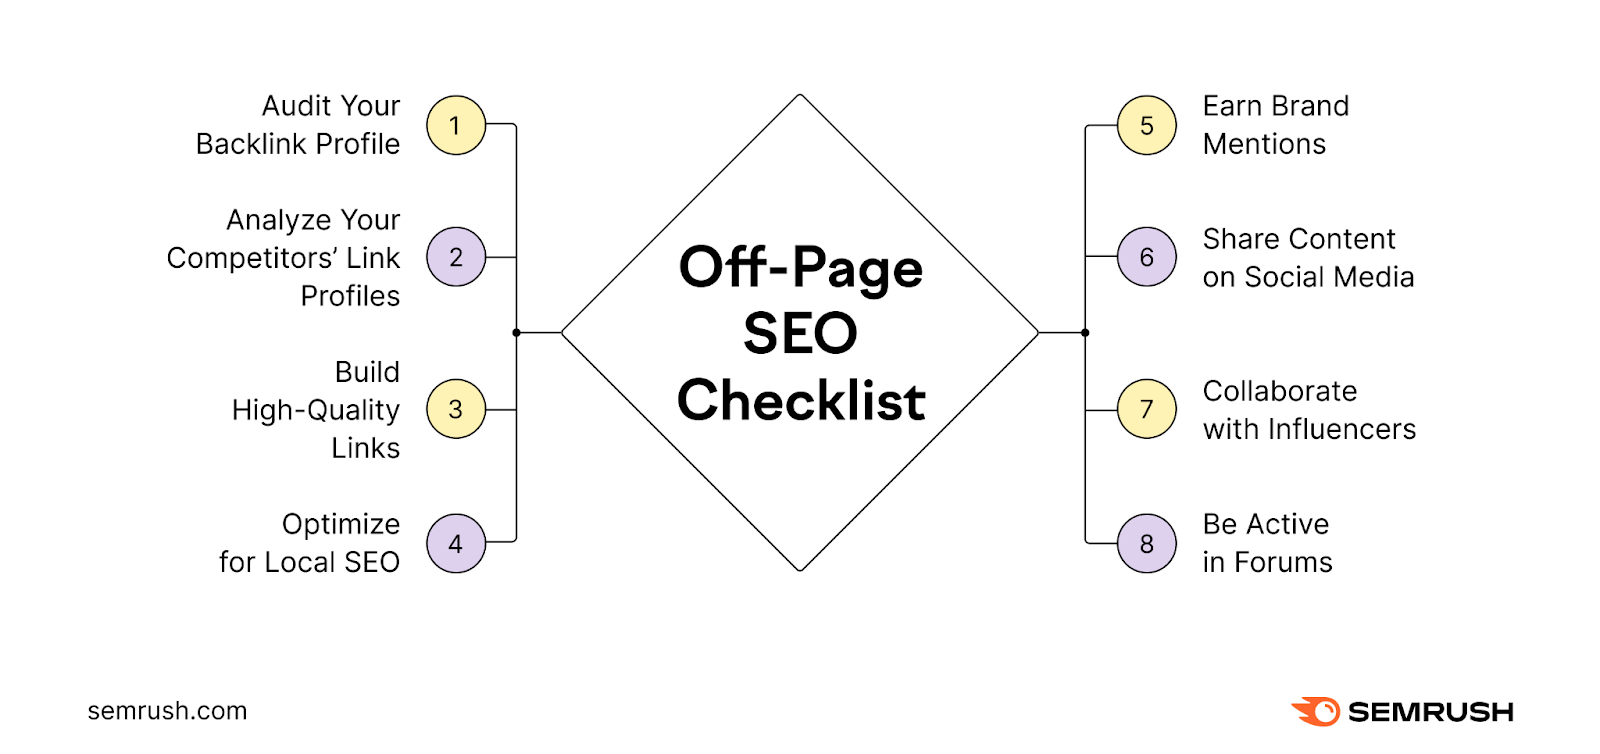 Off-Page SEO checklist